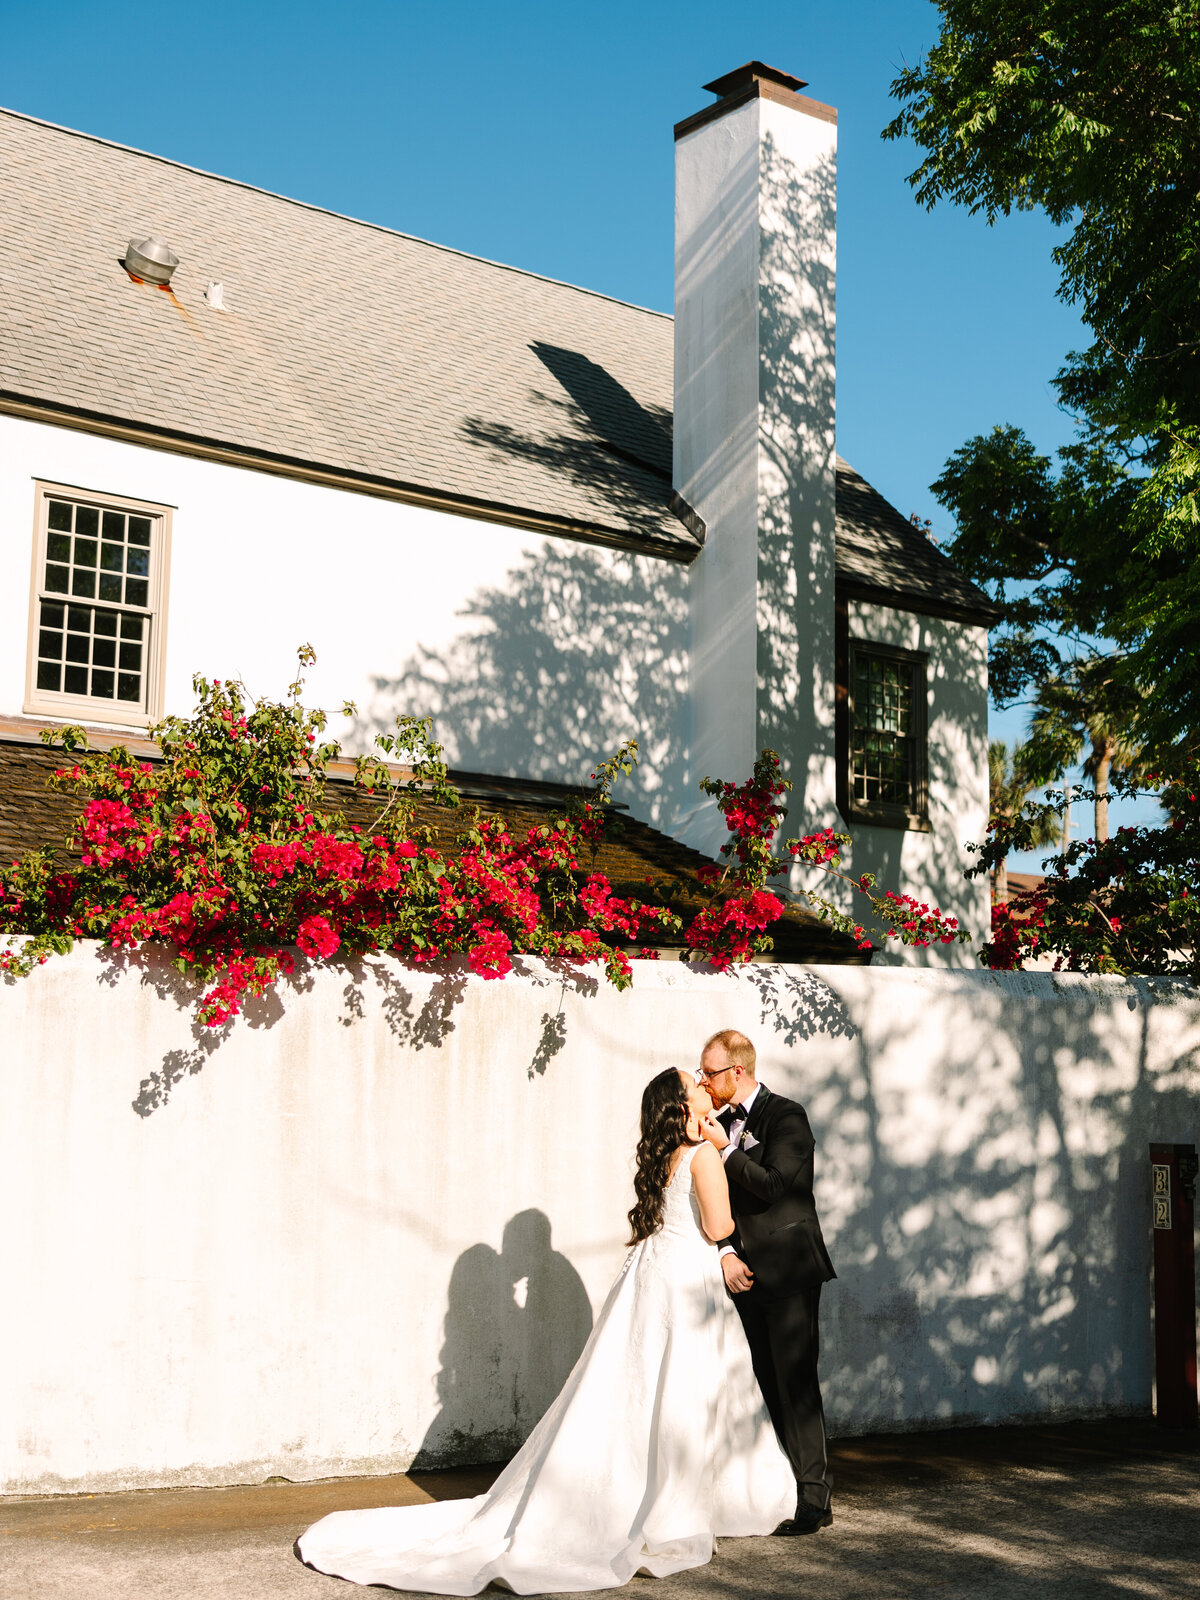 LAURA PEREZ PHOTOGRAPHY LLC Alejandra & michael Oldest house and 9 aviles st augustine weddings-52